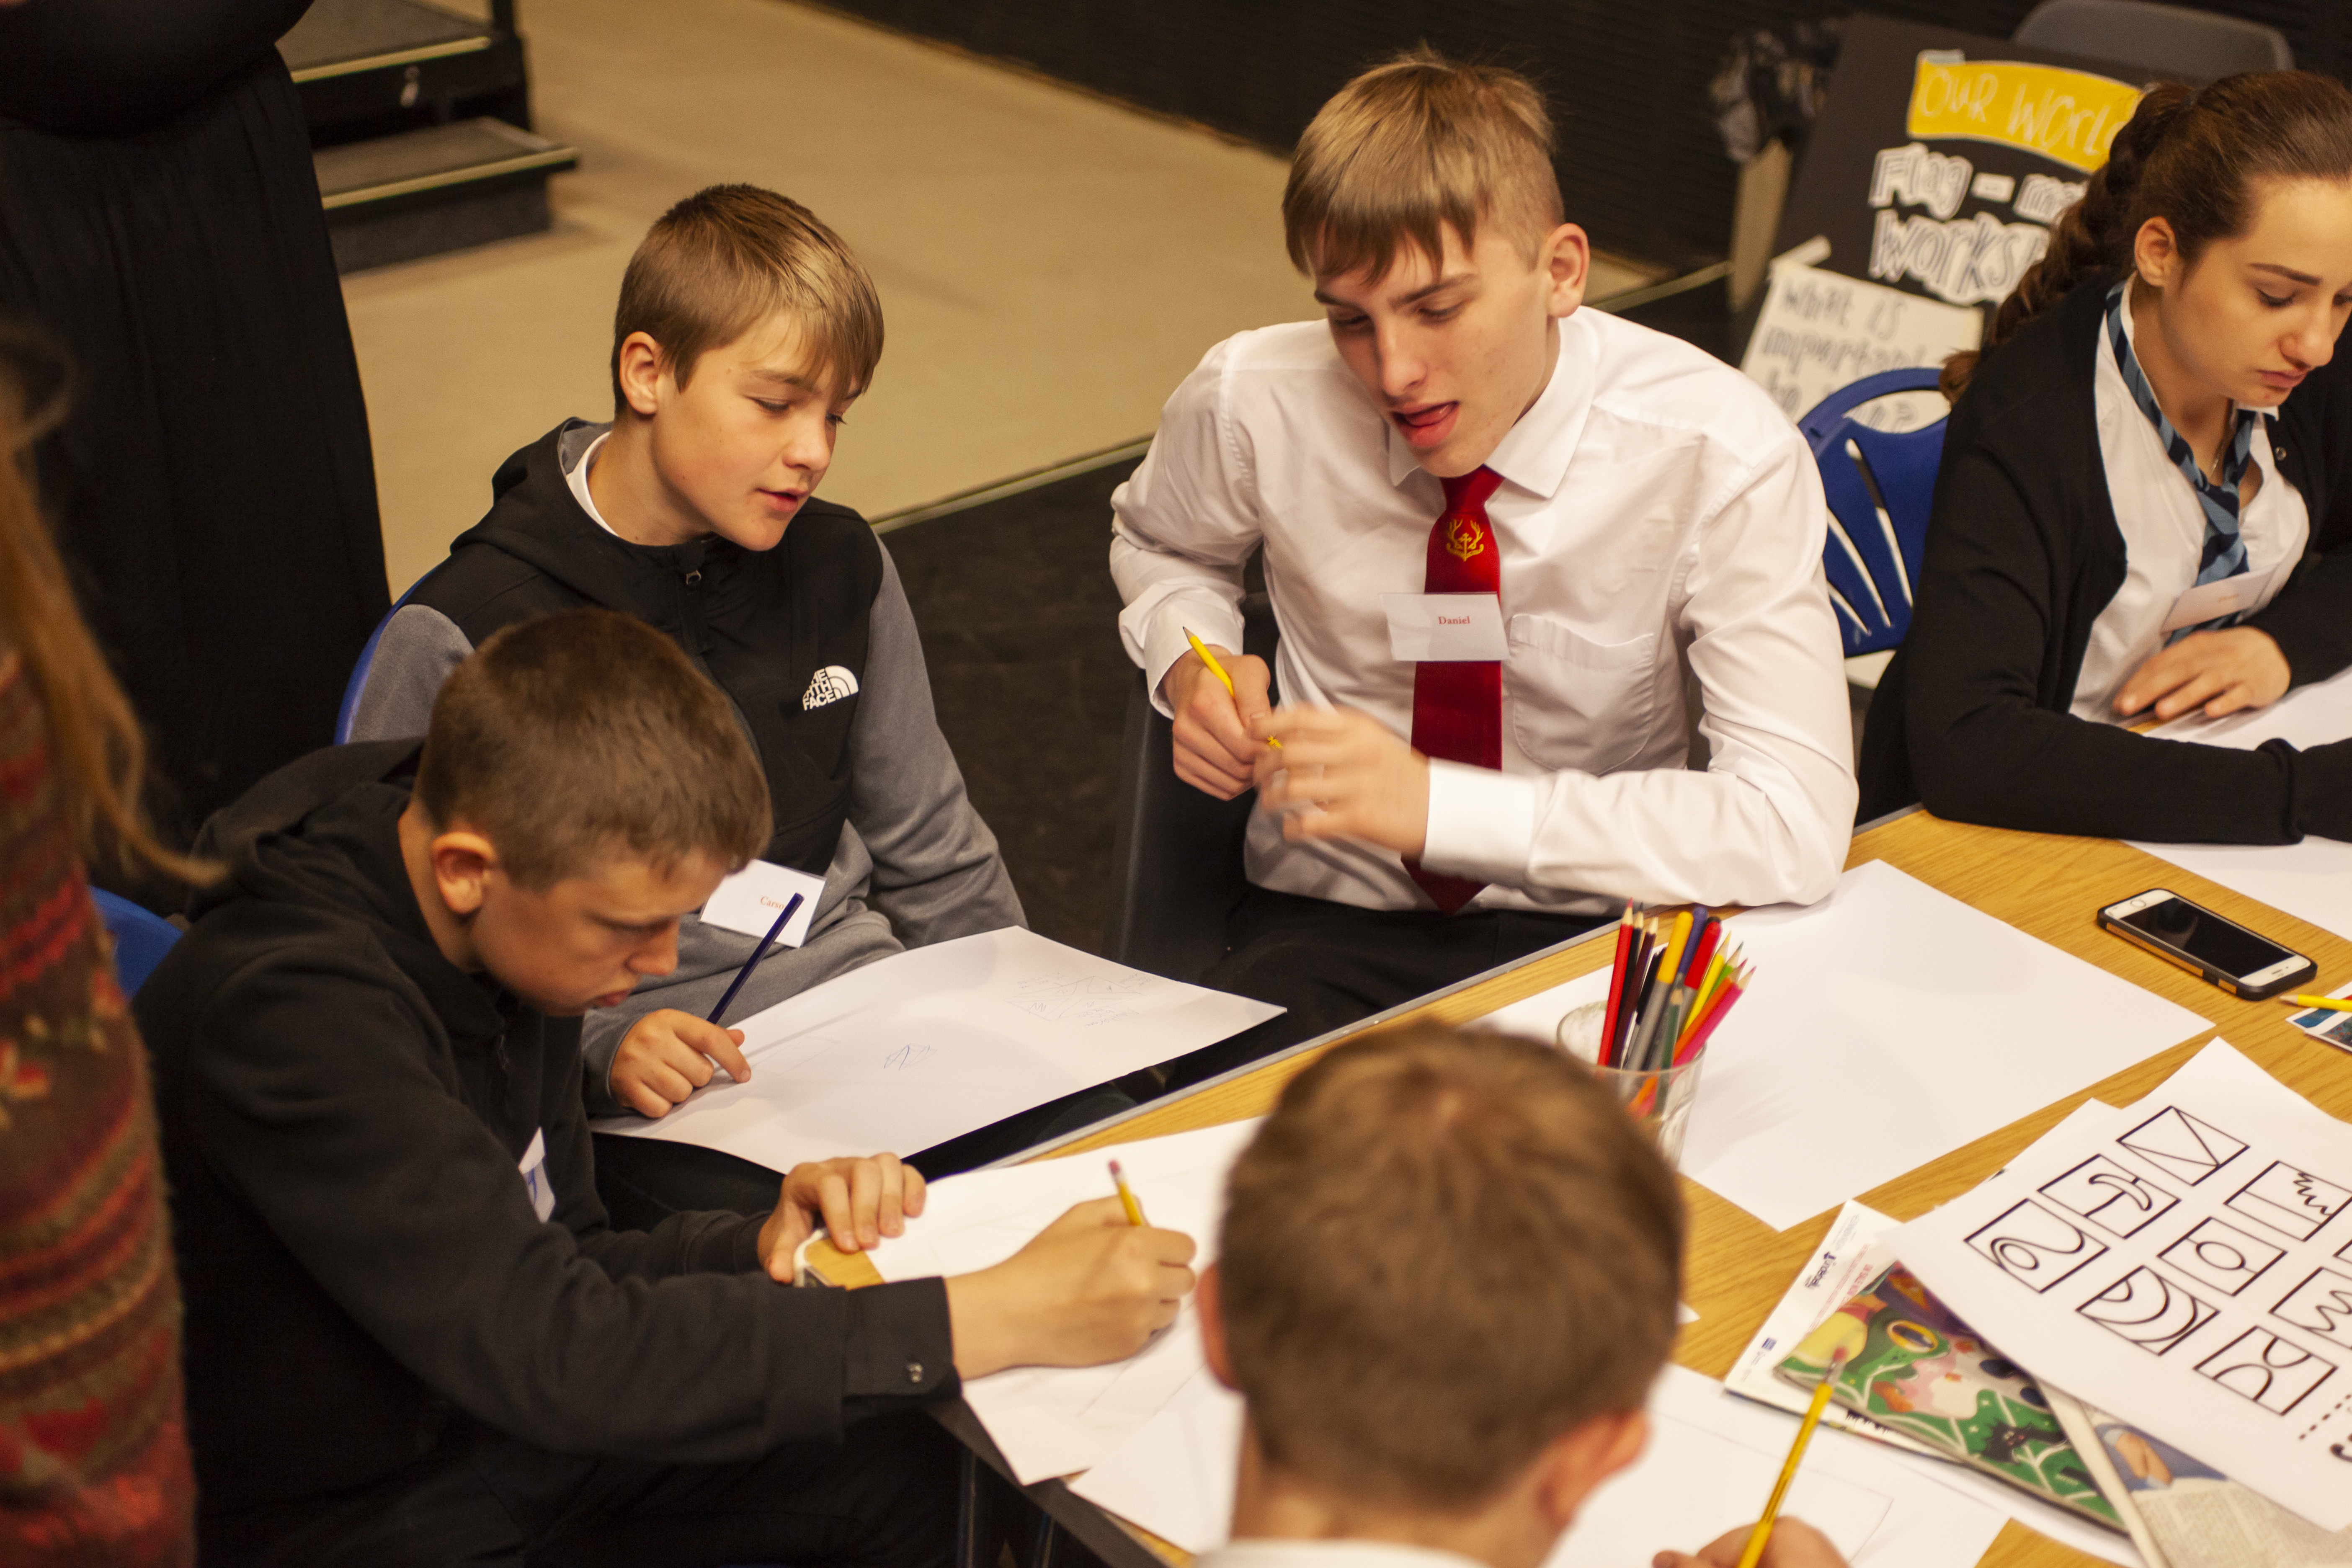 Pupils take part in a school event at North Edinburgh Arts